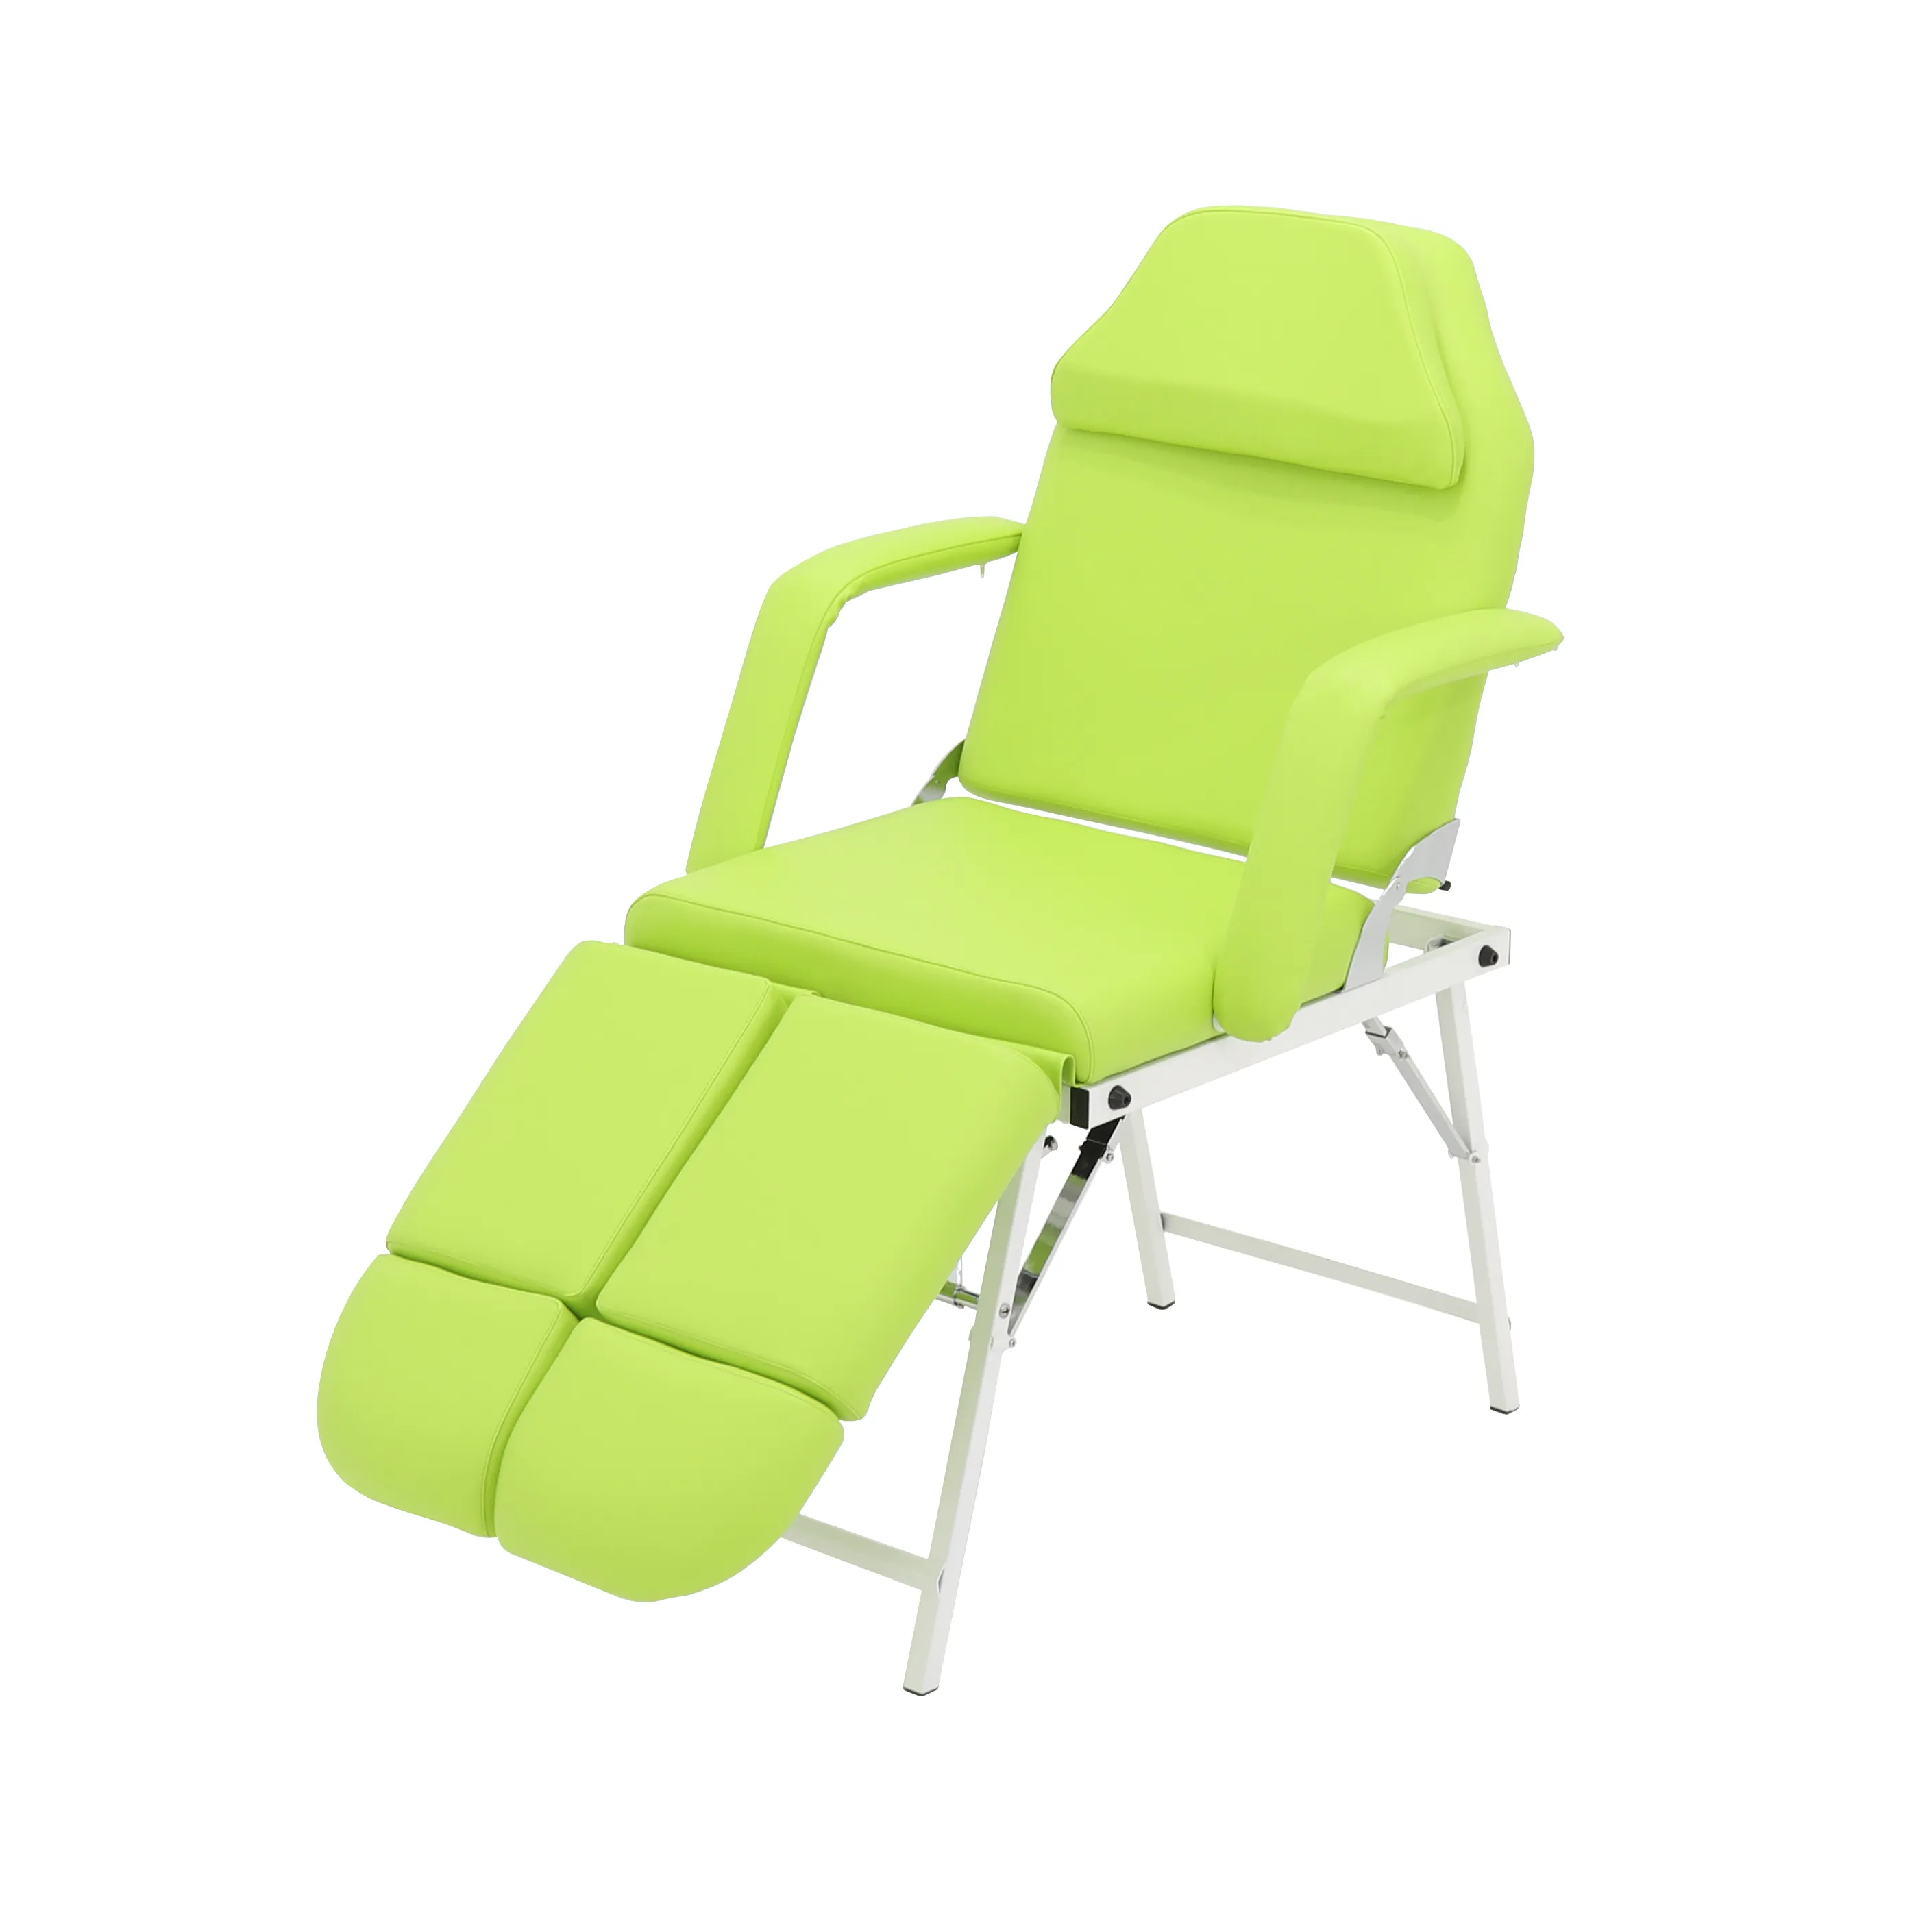 Педикюрное кресло-стол JF-Madvanta (KO-162) (FIX-2A (SS4.01.10)) - 1 